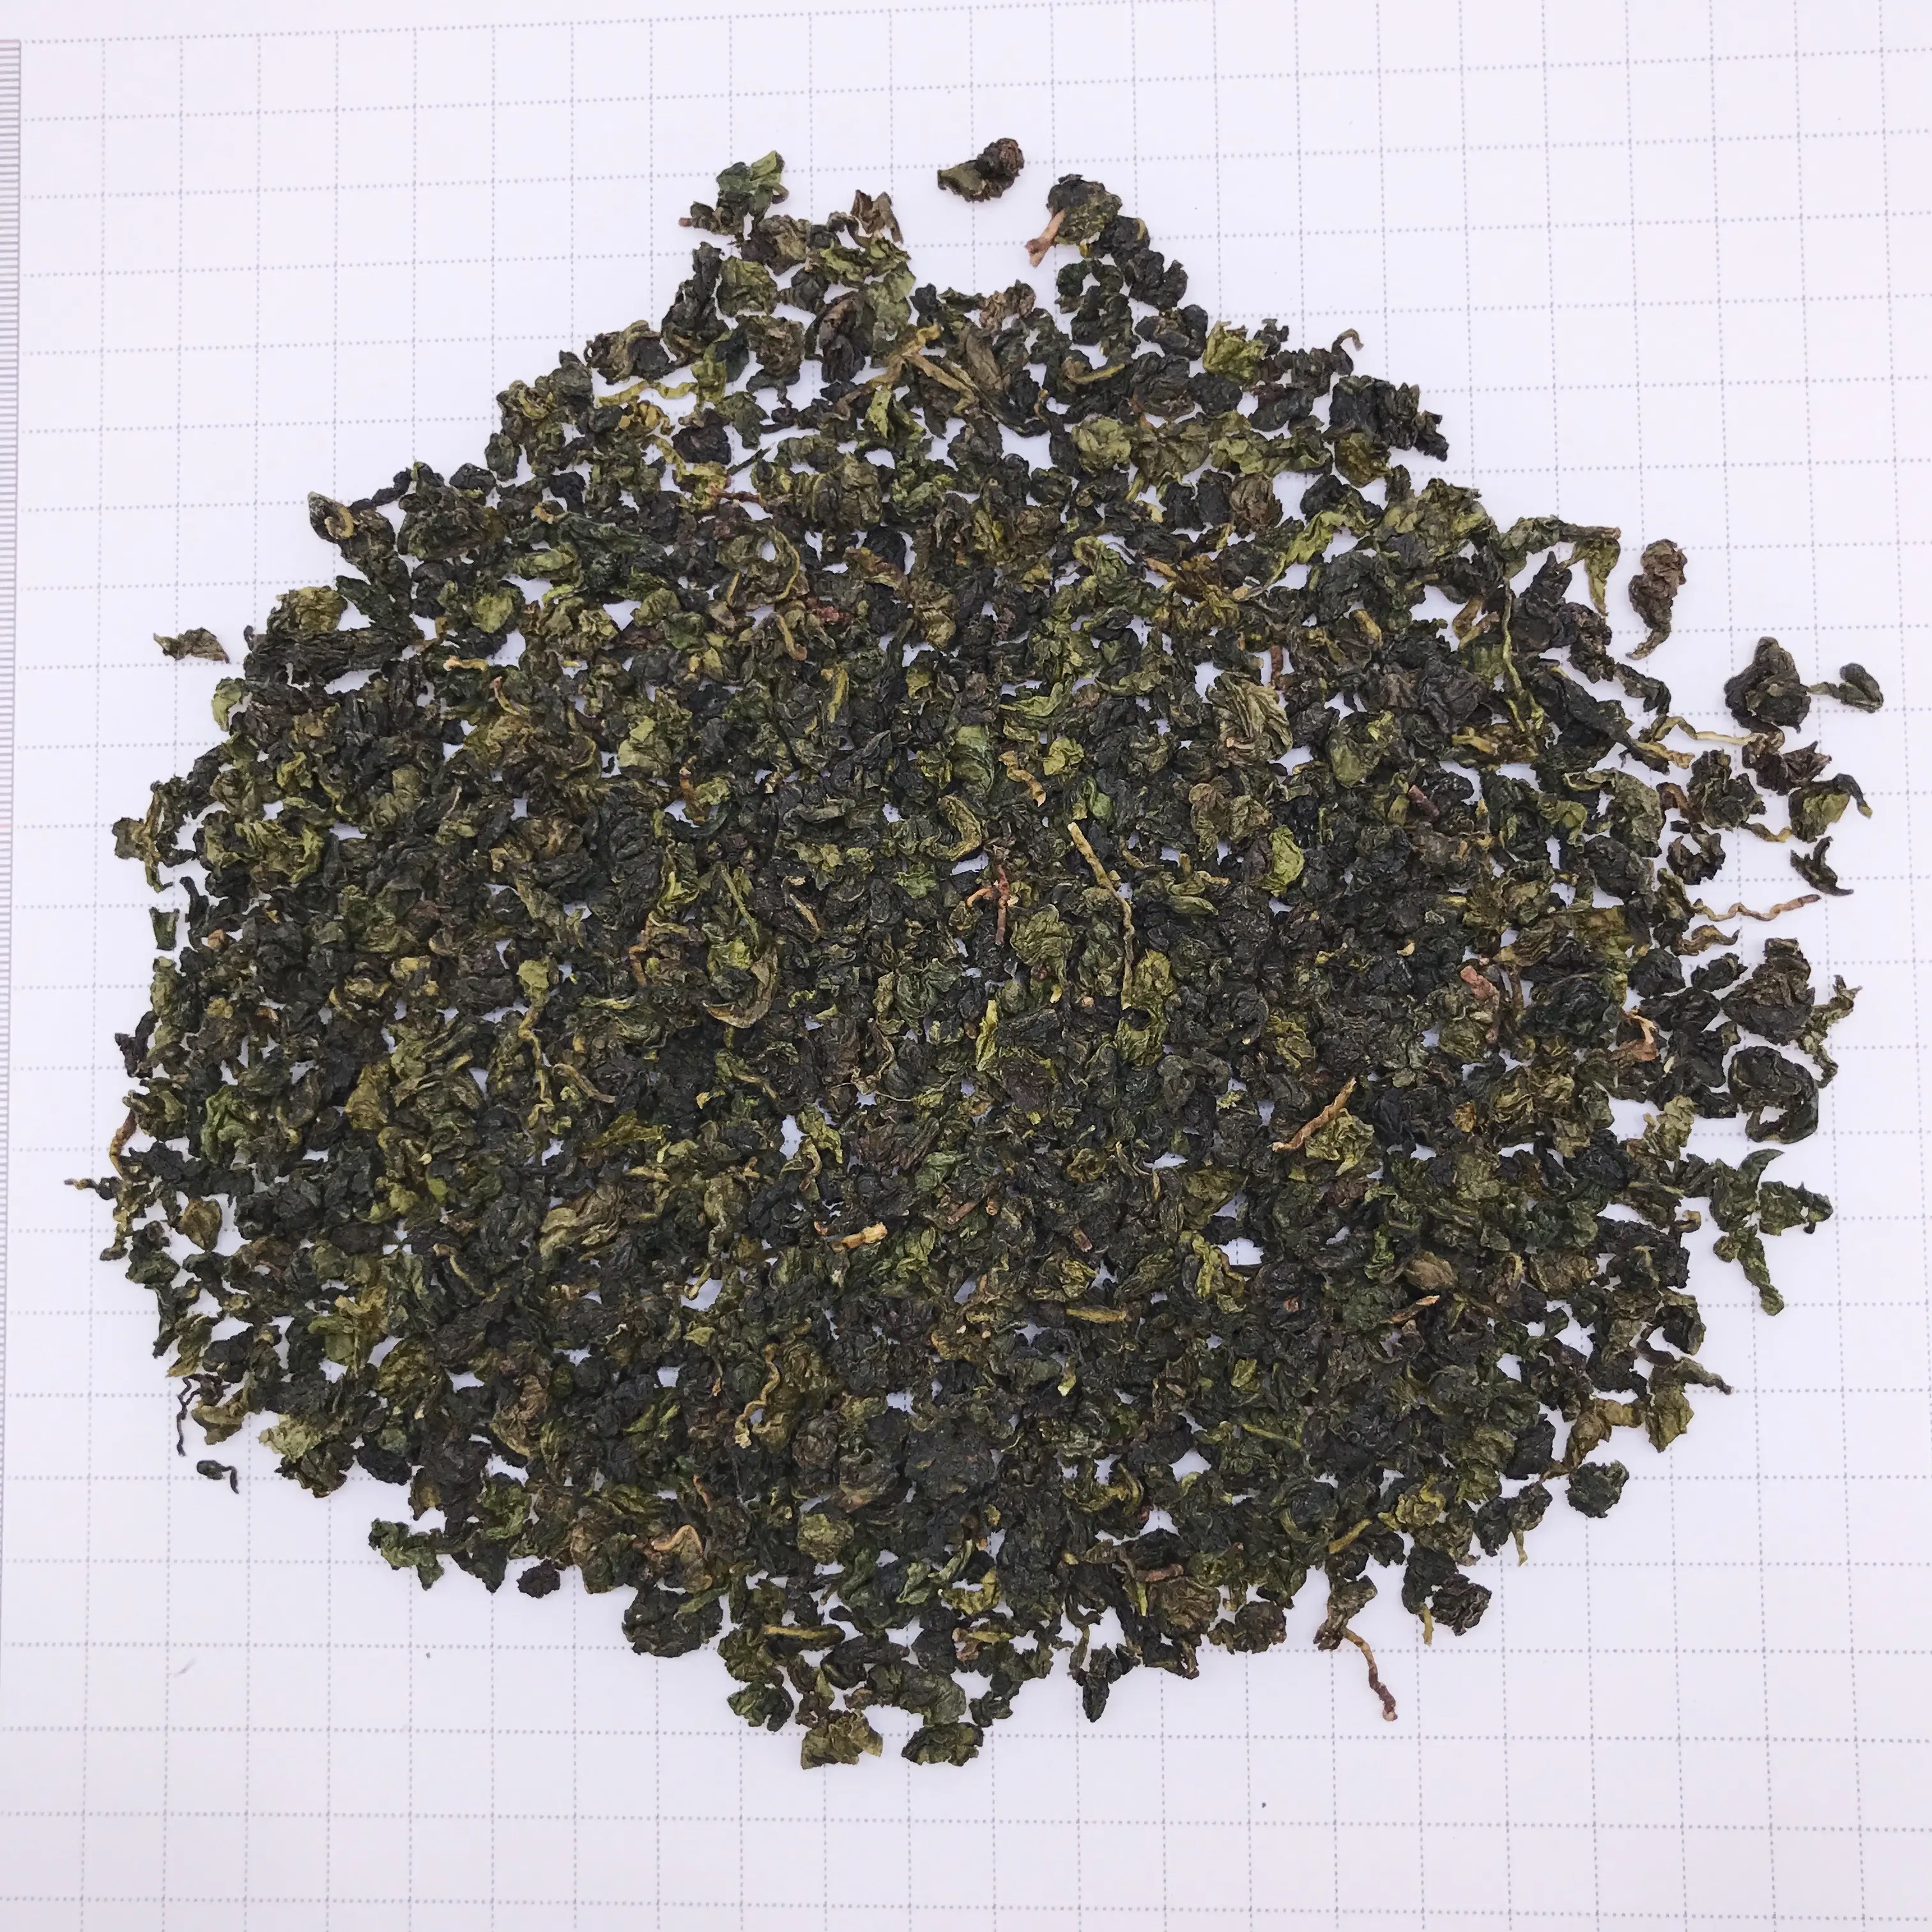 GFG003 Wholesale EU Standards Tie Guan Yin Tea Good Quality High Mountain Oolong tea